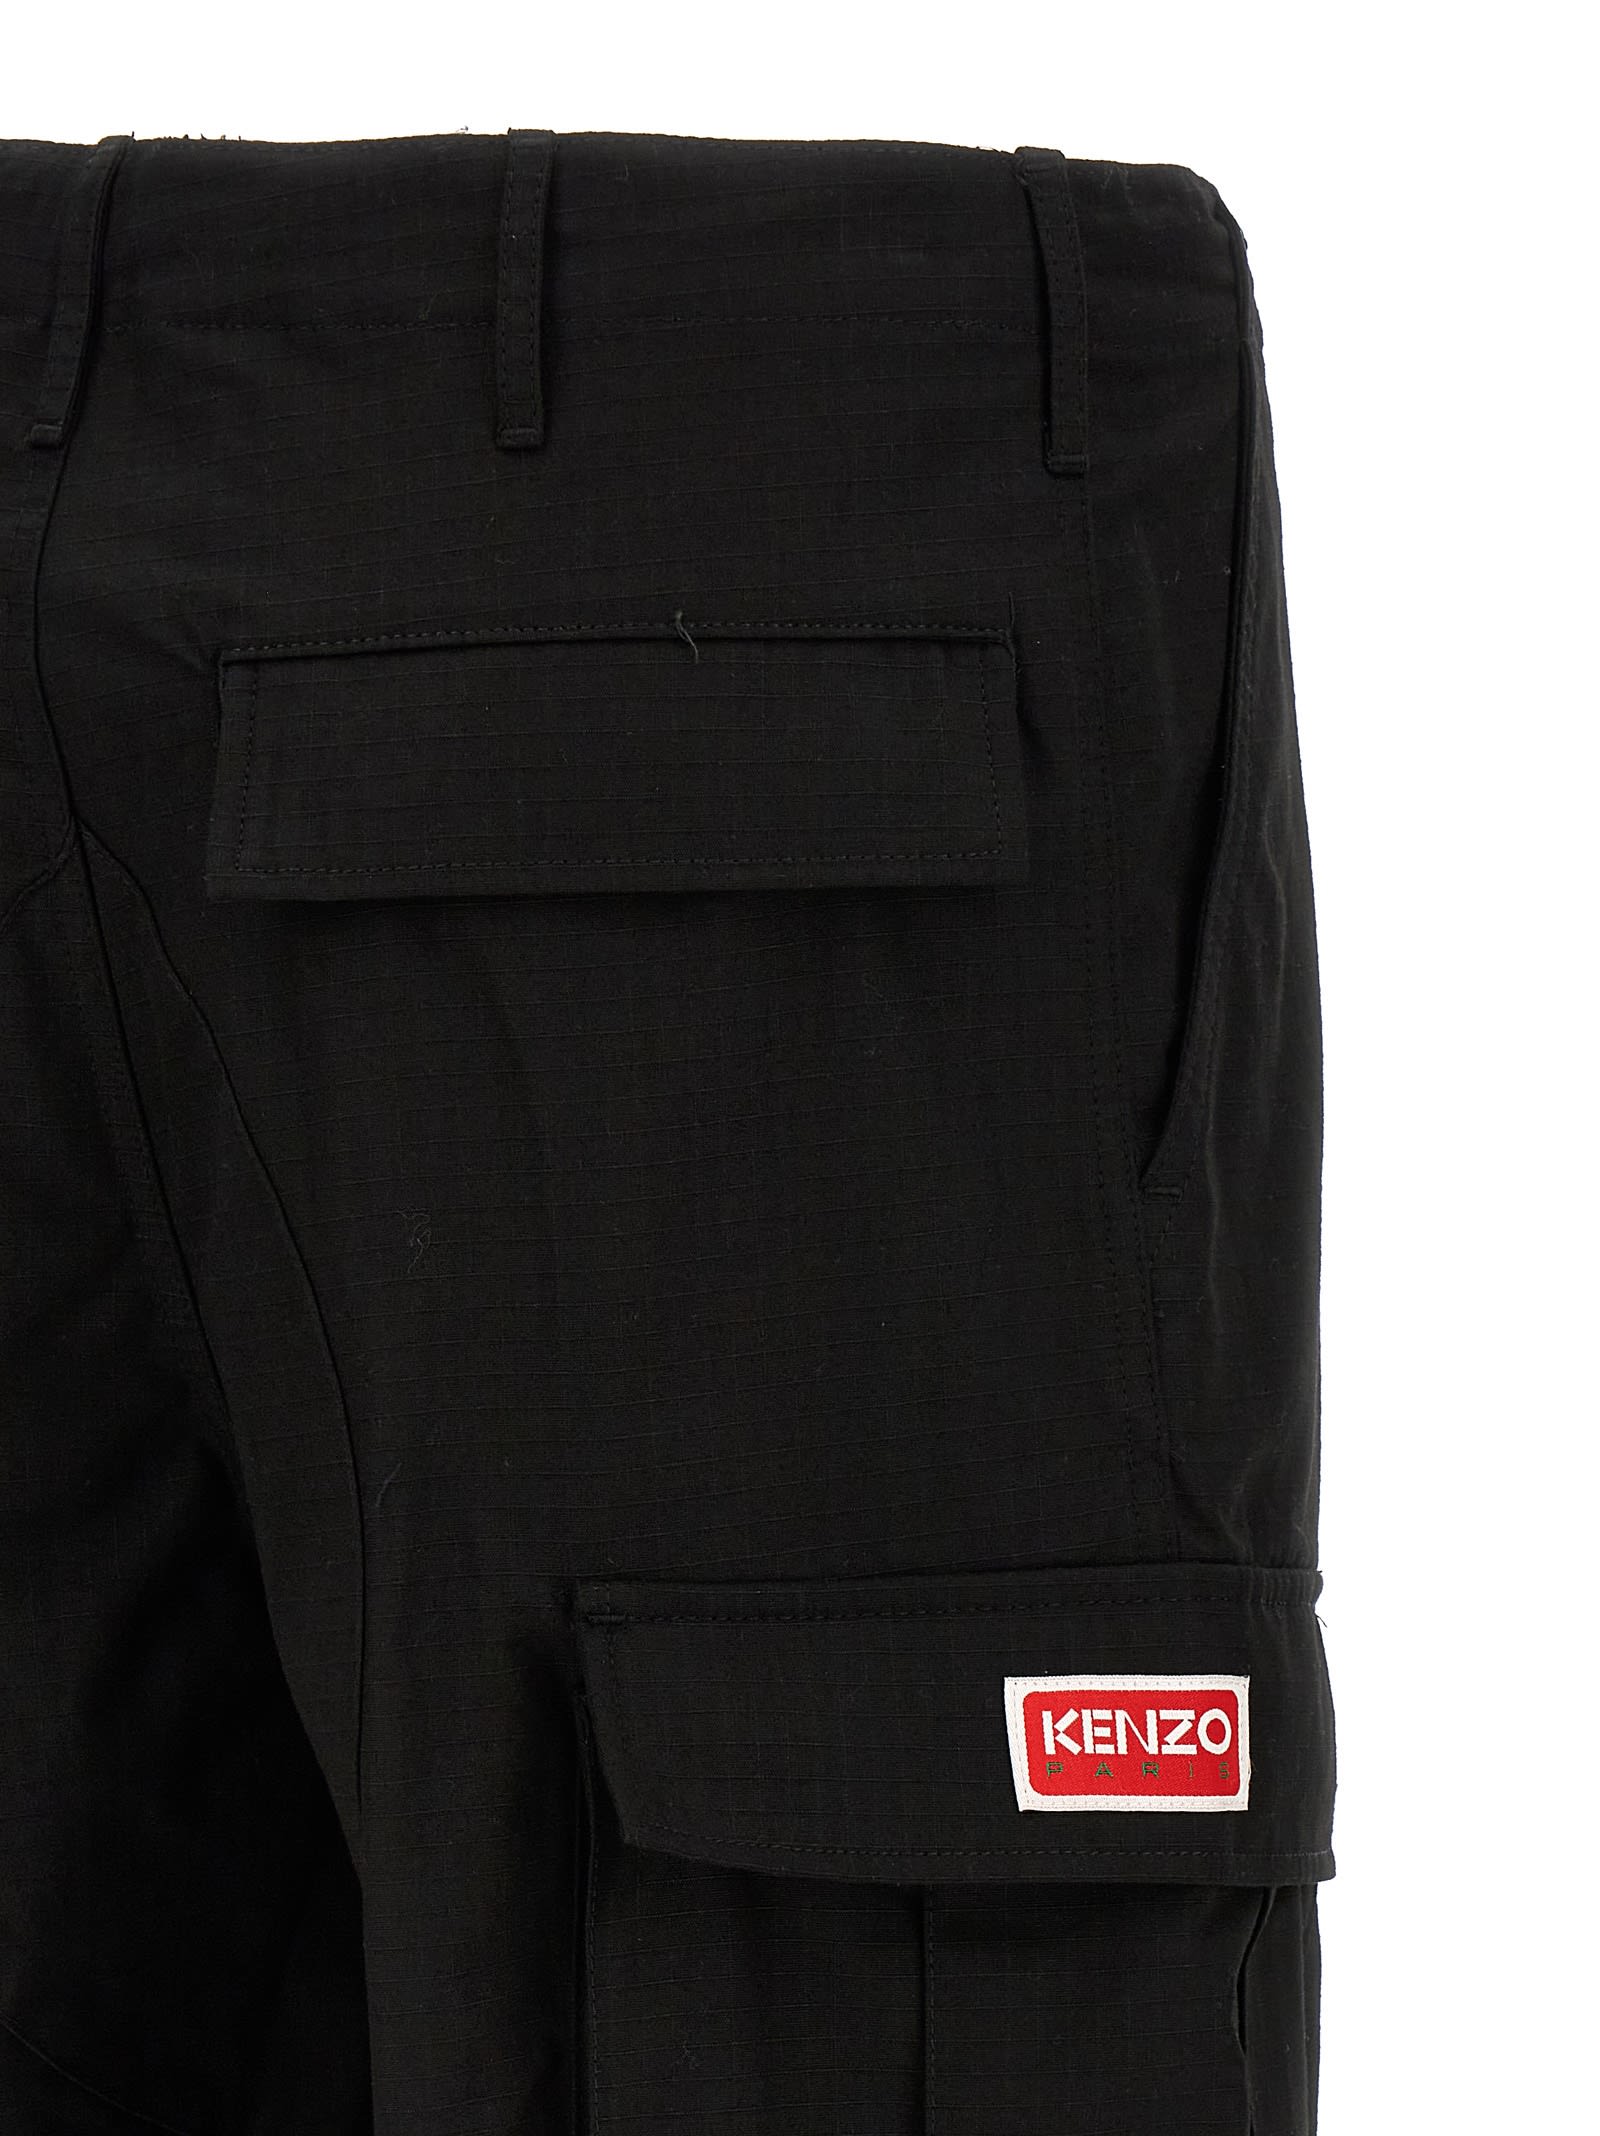 Dickies Slash Pocket Black Cargo Jogger Pants